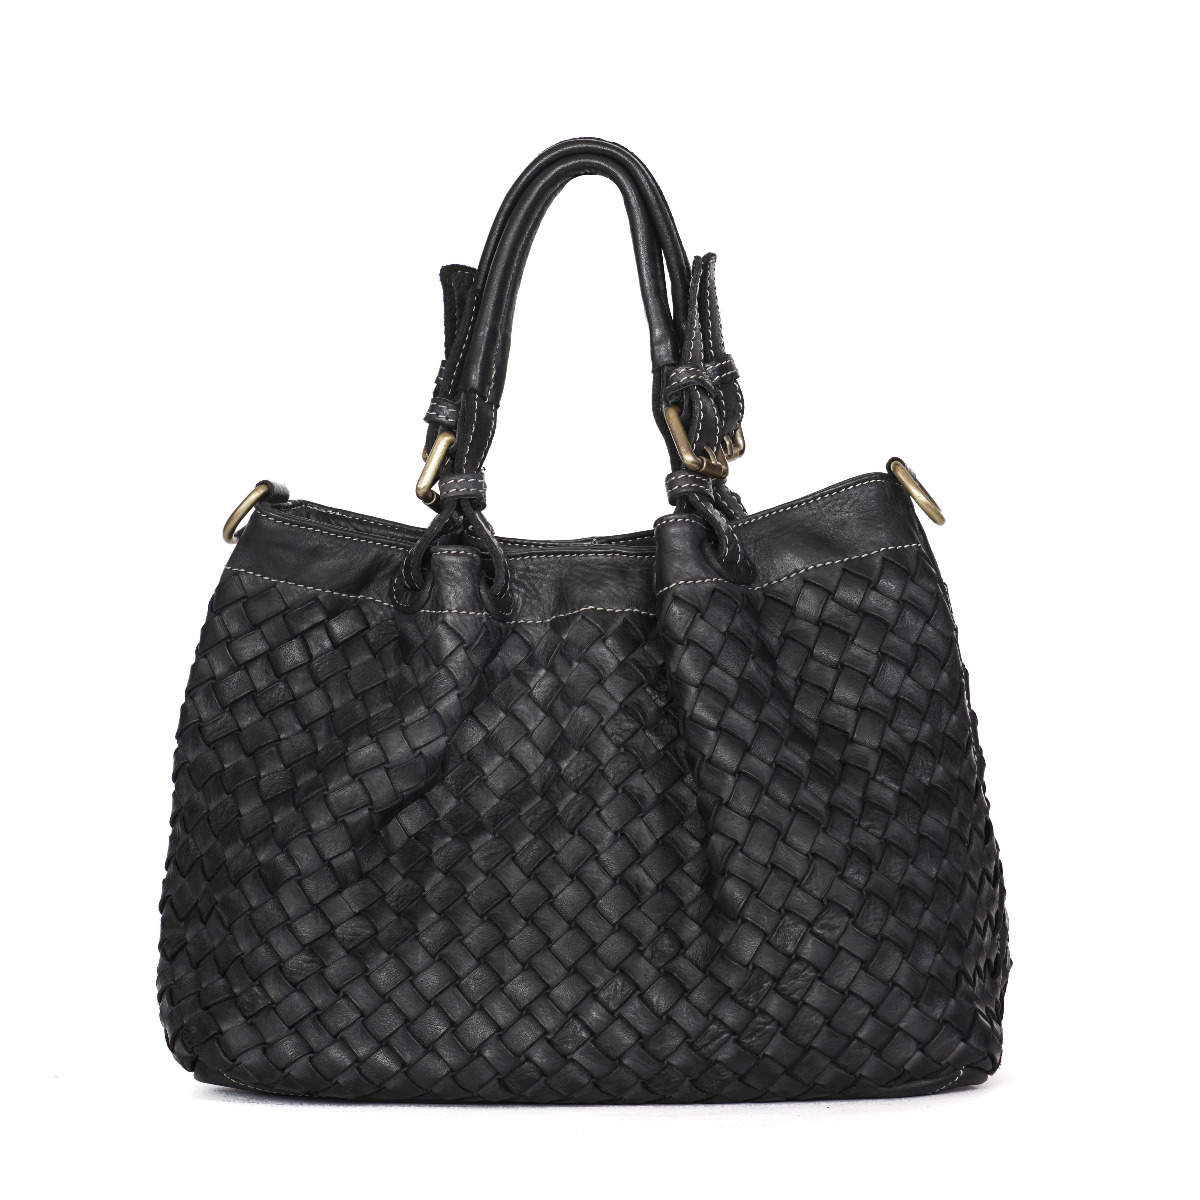 Black medium size woven leather handbag